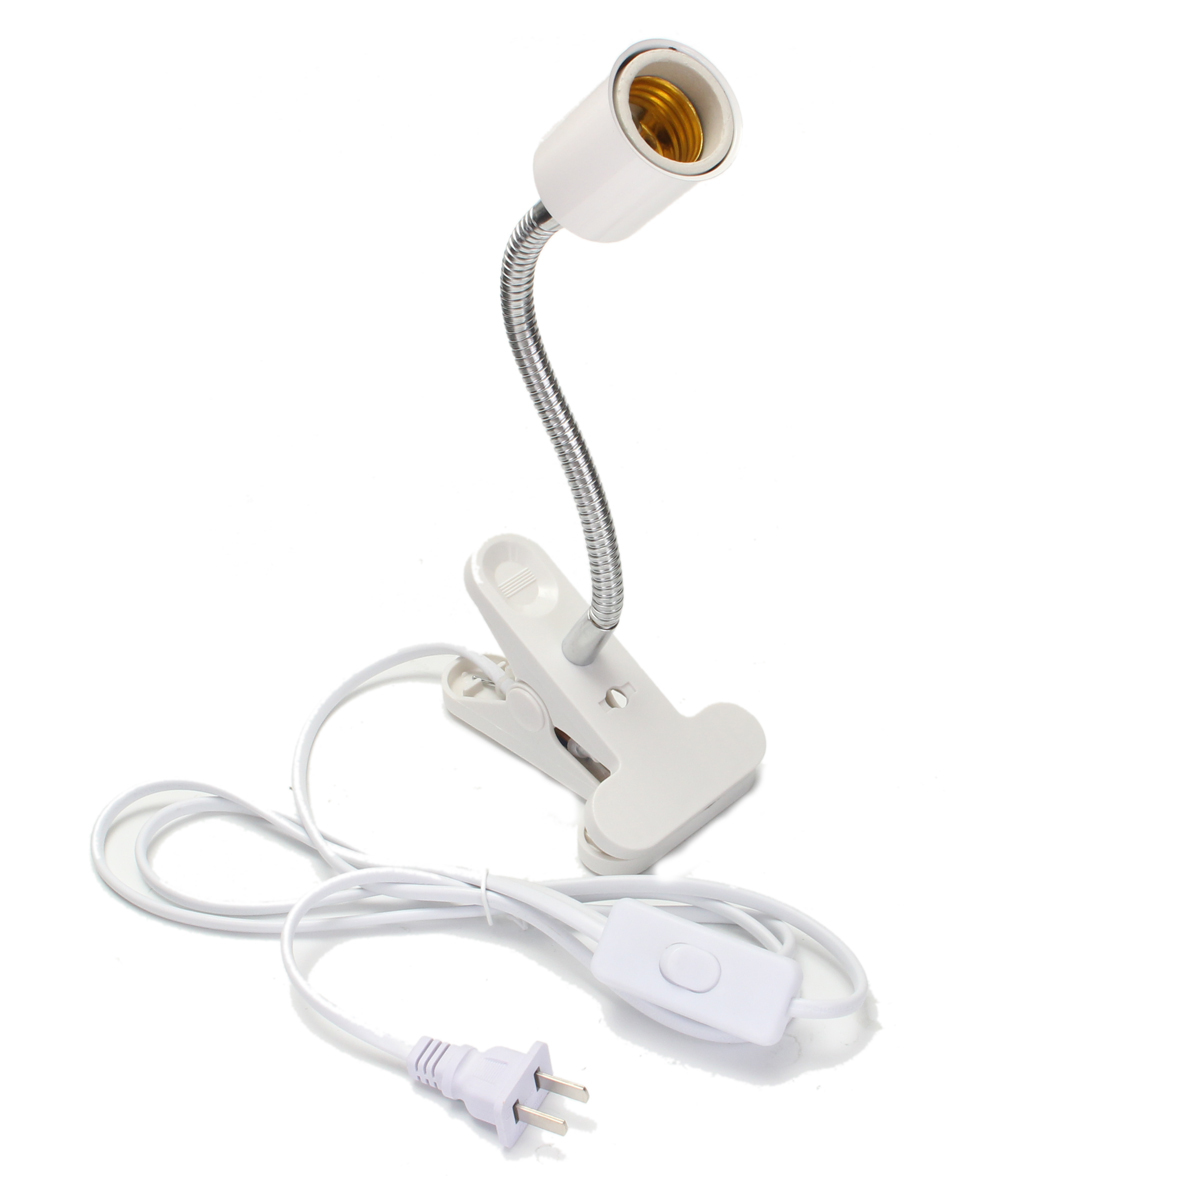 20CM-E27-Flexible-Pet-LED-Light-Lamp-Bulb-Adapter-Holder-Socket-with-Clip-On-Off-Switch-EU-US-Plug-1309557-1